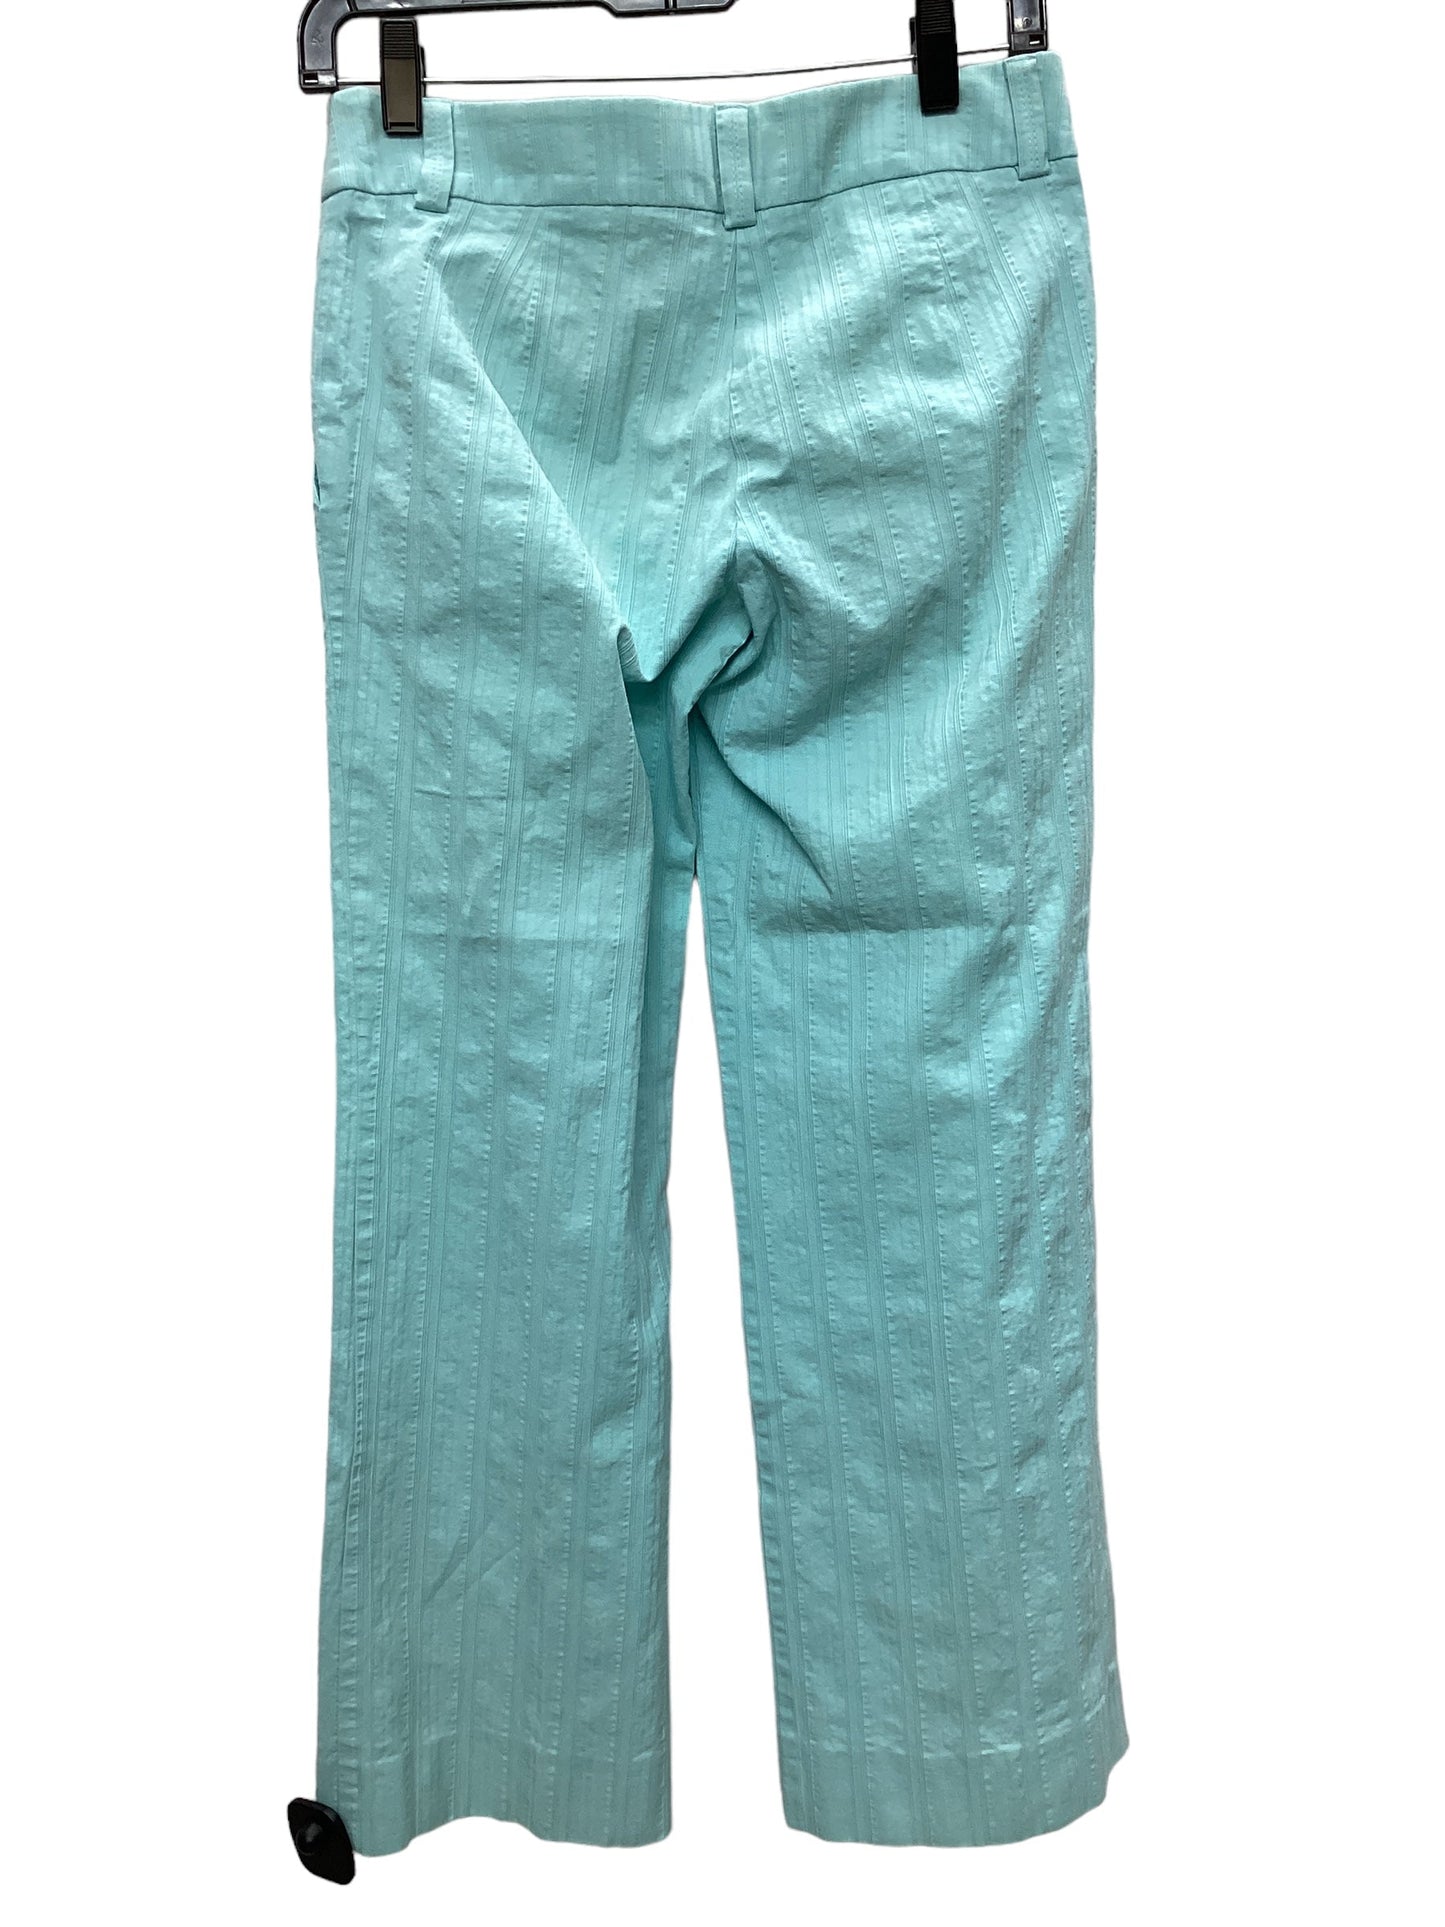 Pants Work/dress By Cmb  Size: 2